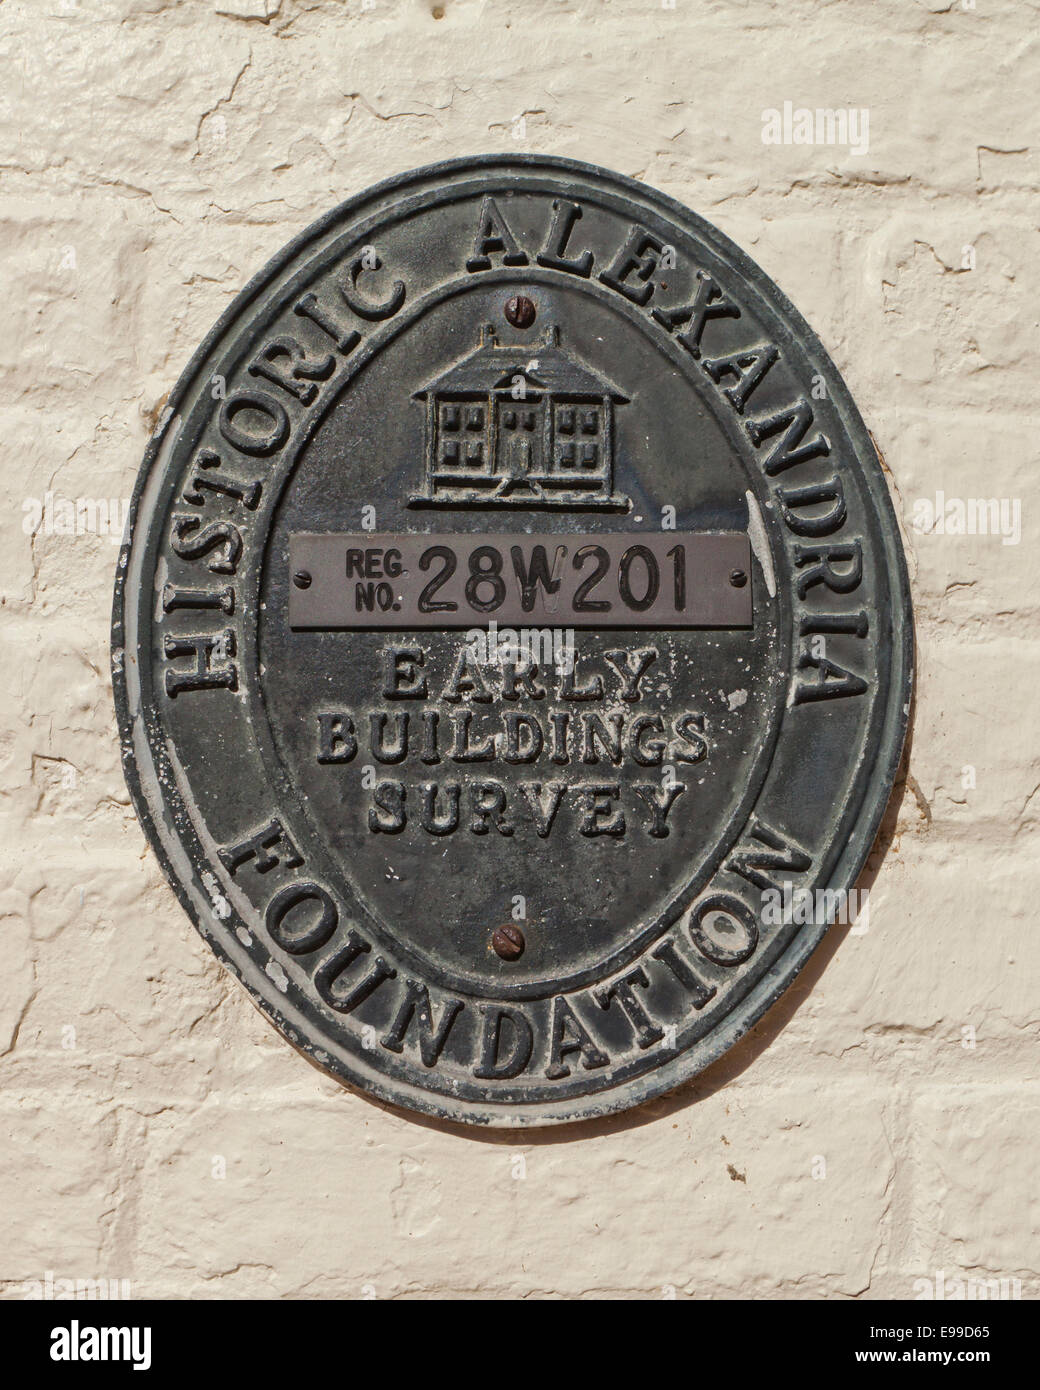 Historic building plaque - Alexandria, Virginia USA Stock Photo